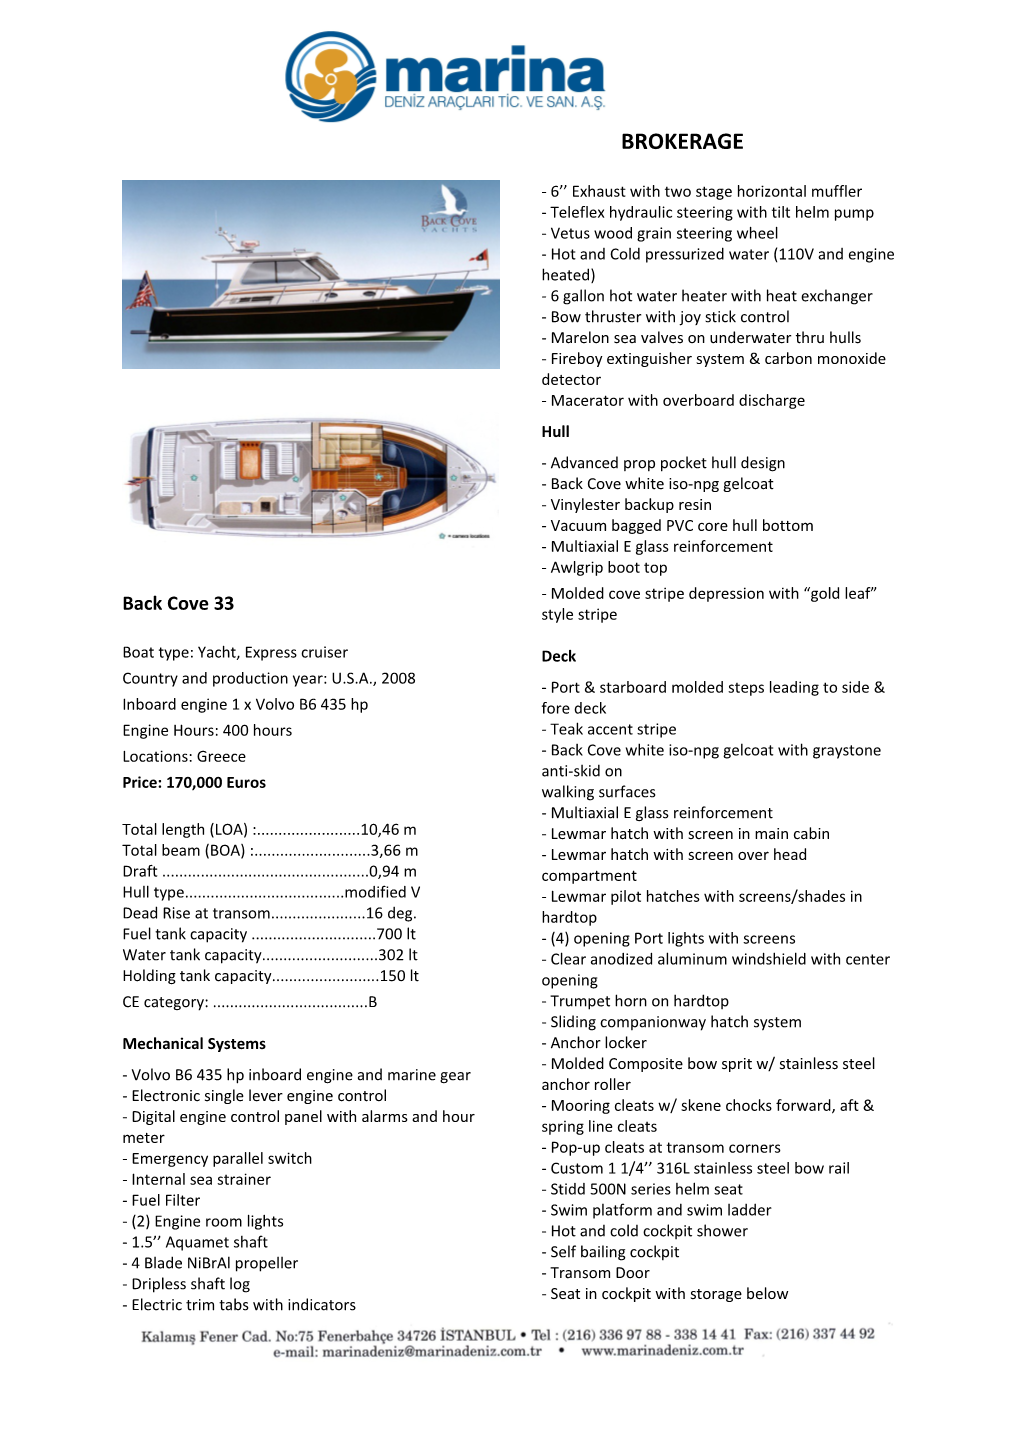 Boat Type: Yacht, Express Cruiser